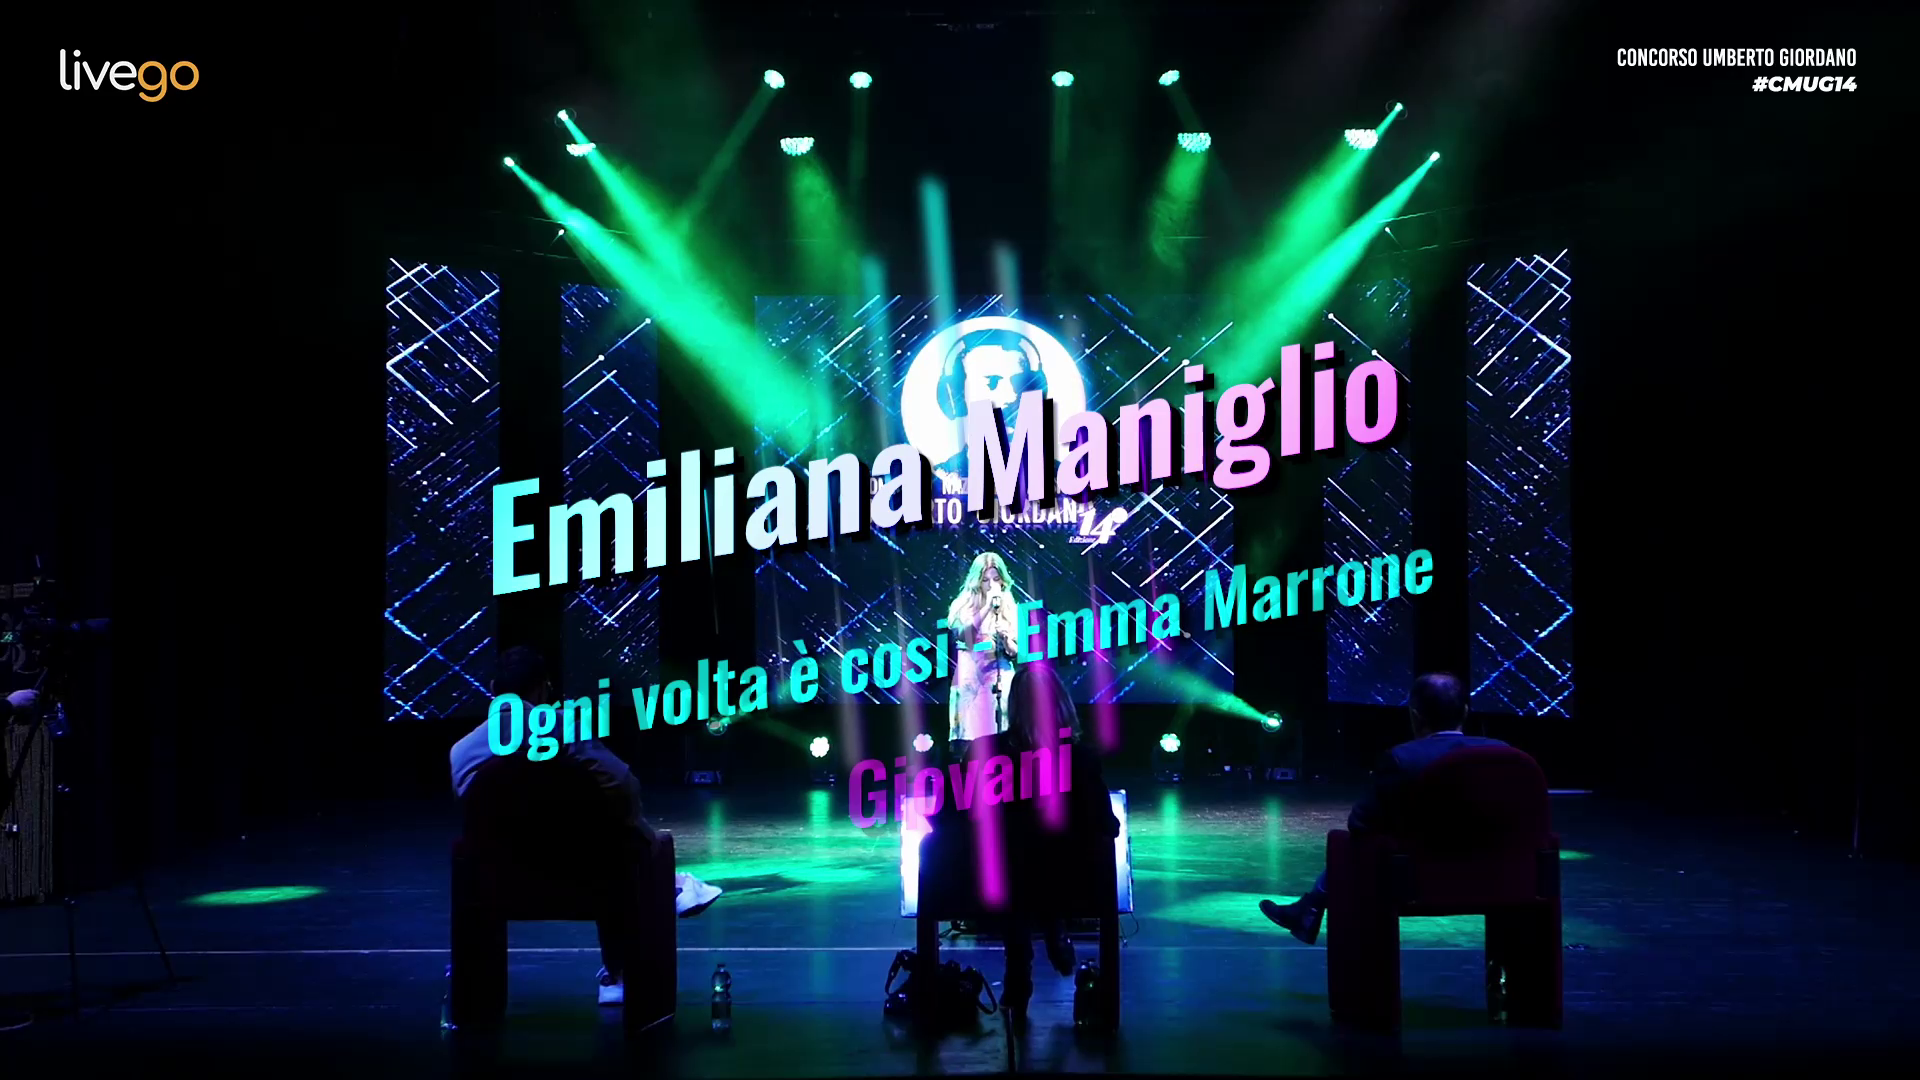 32 - Emiliana Maniglio